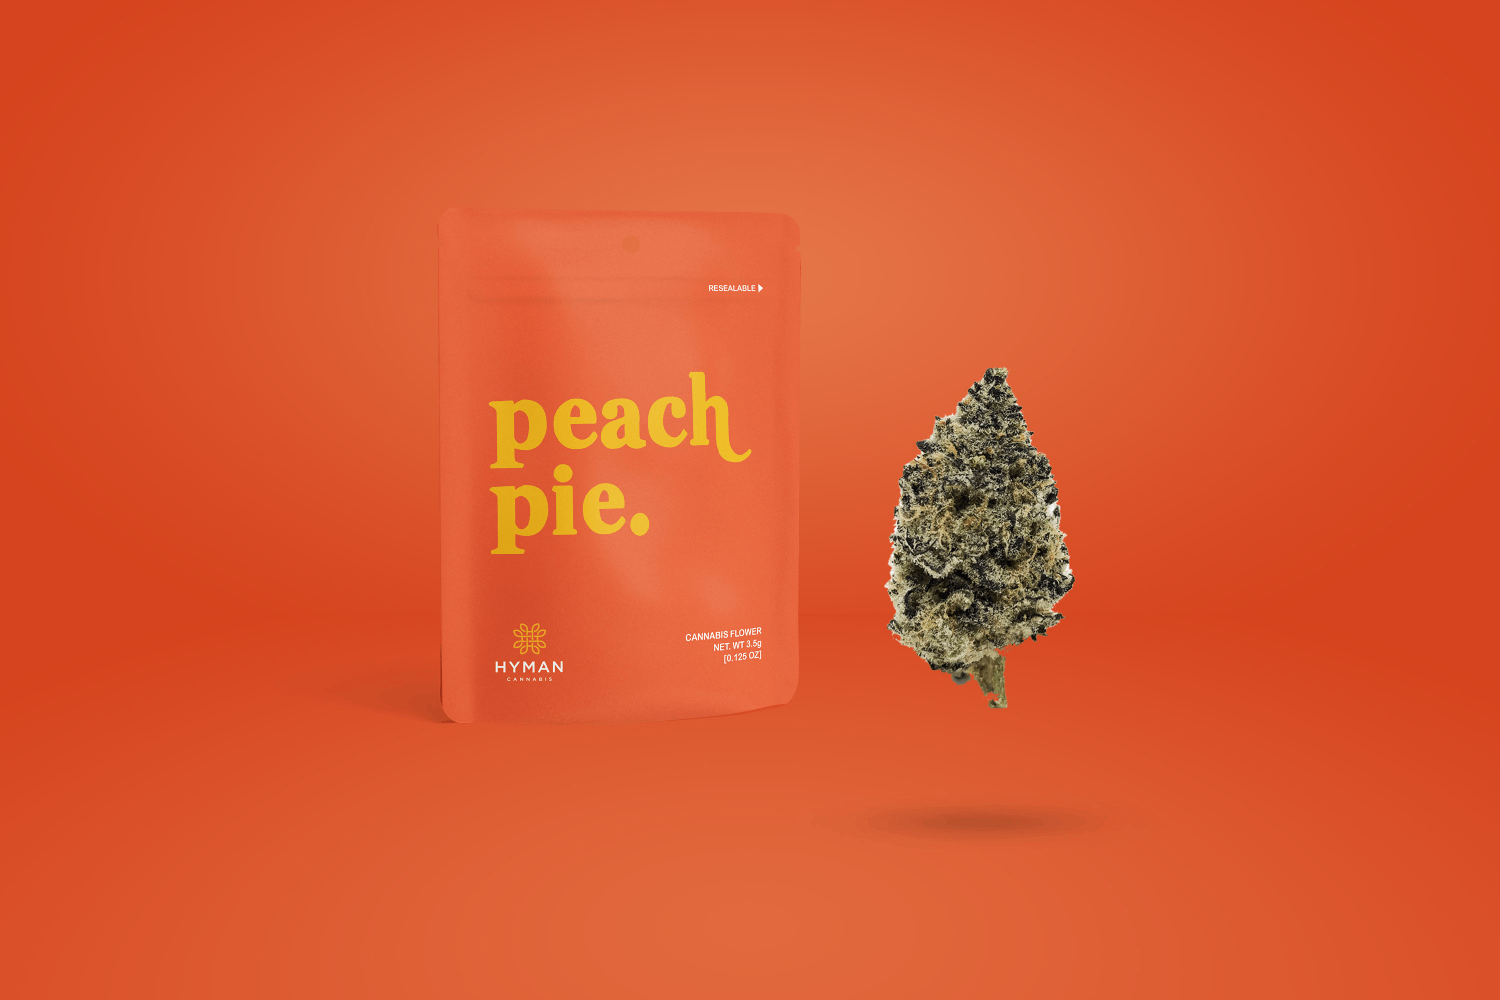 Peach Pie, Weed Buds, Hyman Cannabis Strain